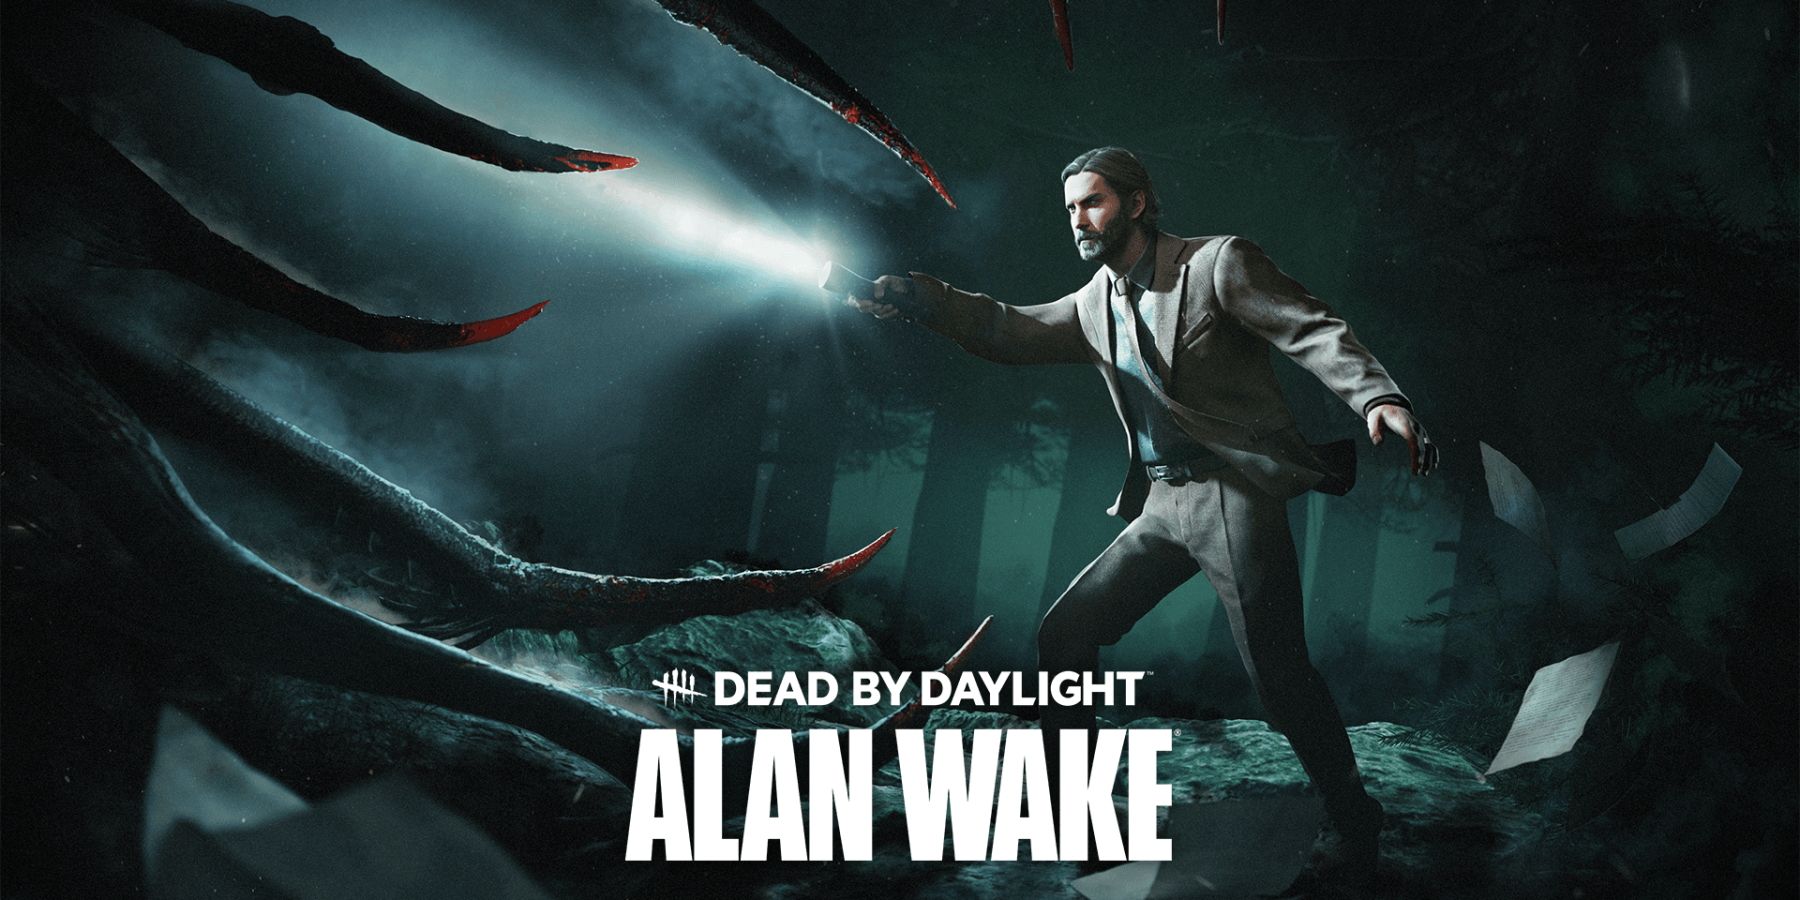 The key art for Dead by Daylight's Alan Wake DLC, showcasing Alan Wake shining a flashlight on an off-screen creature.